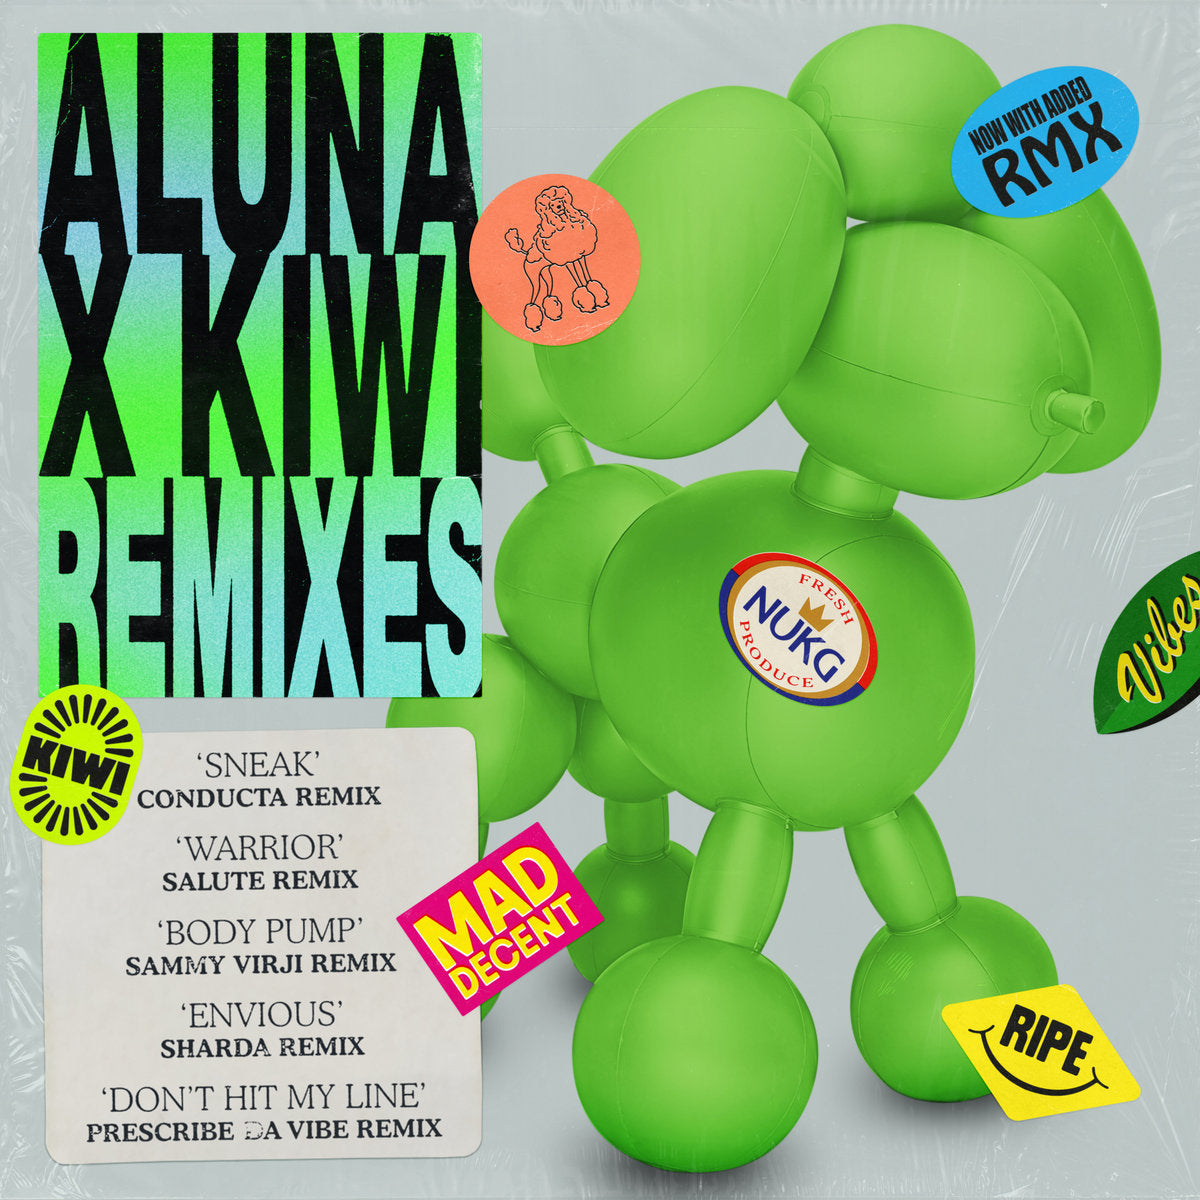 Renaissance (Kiwi Remixes)